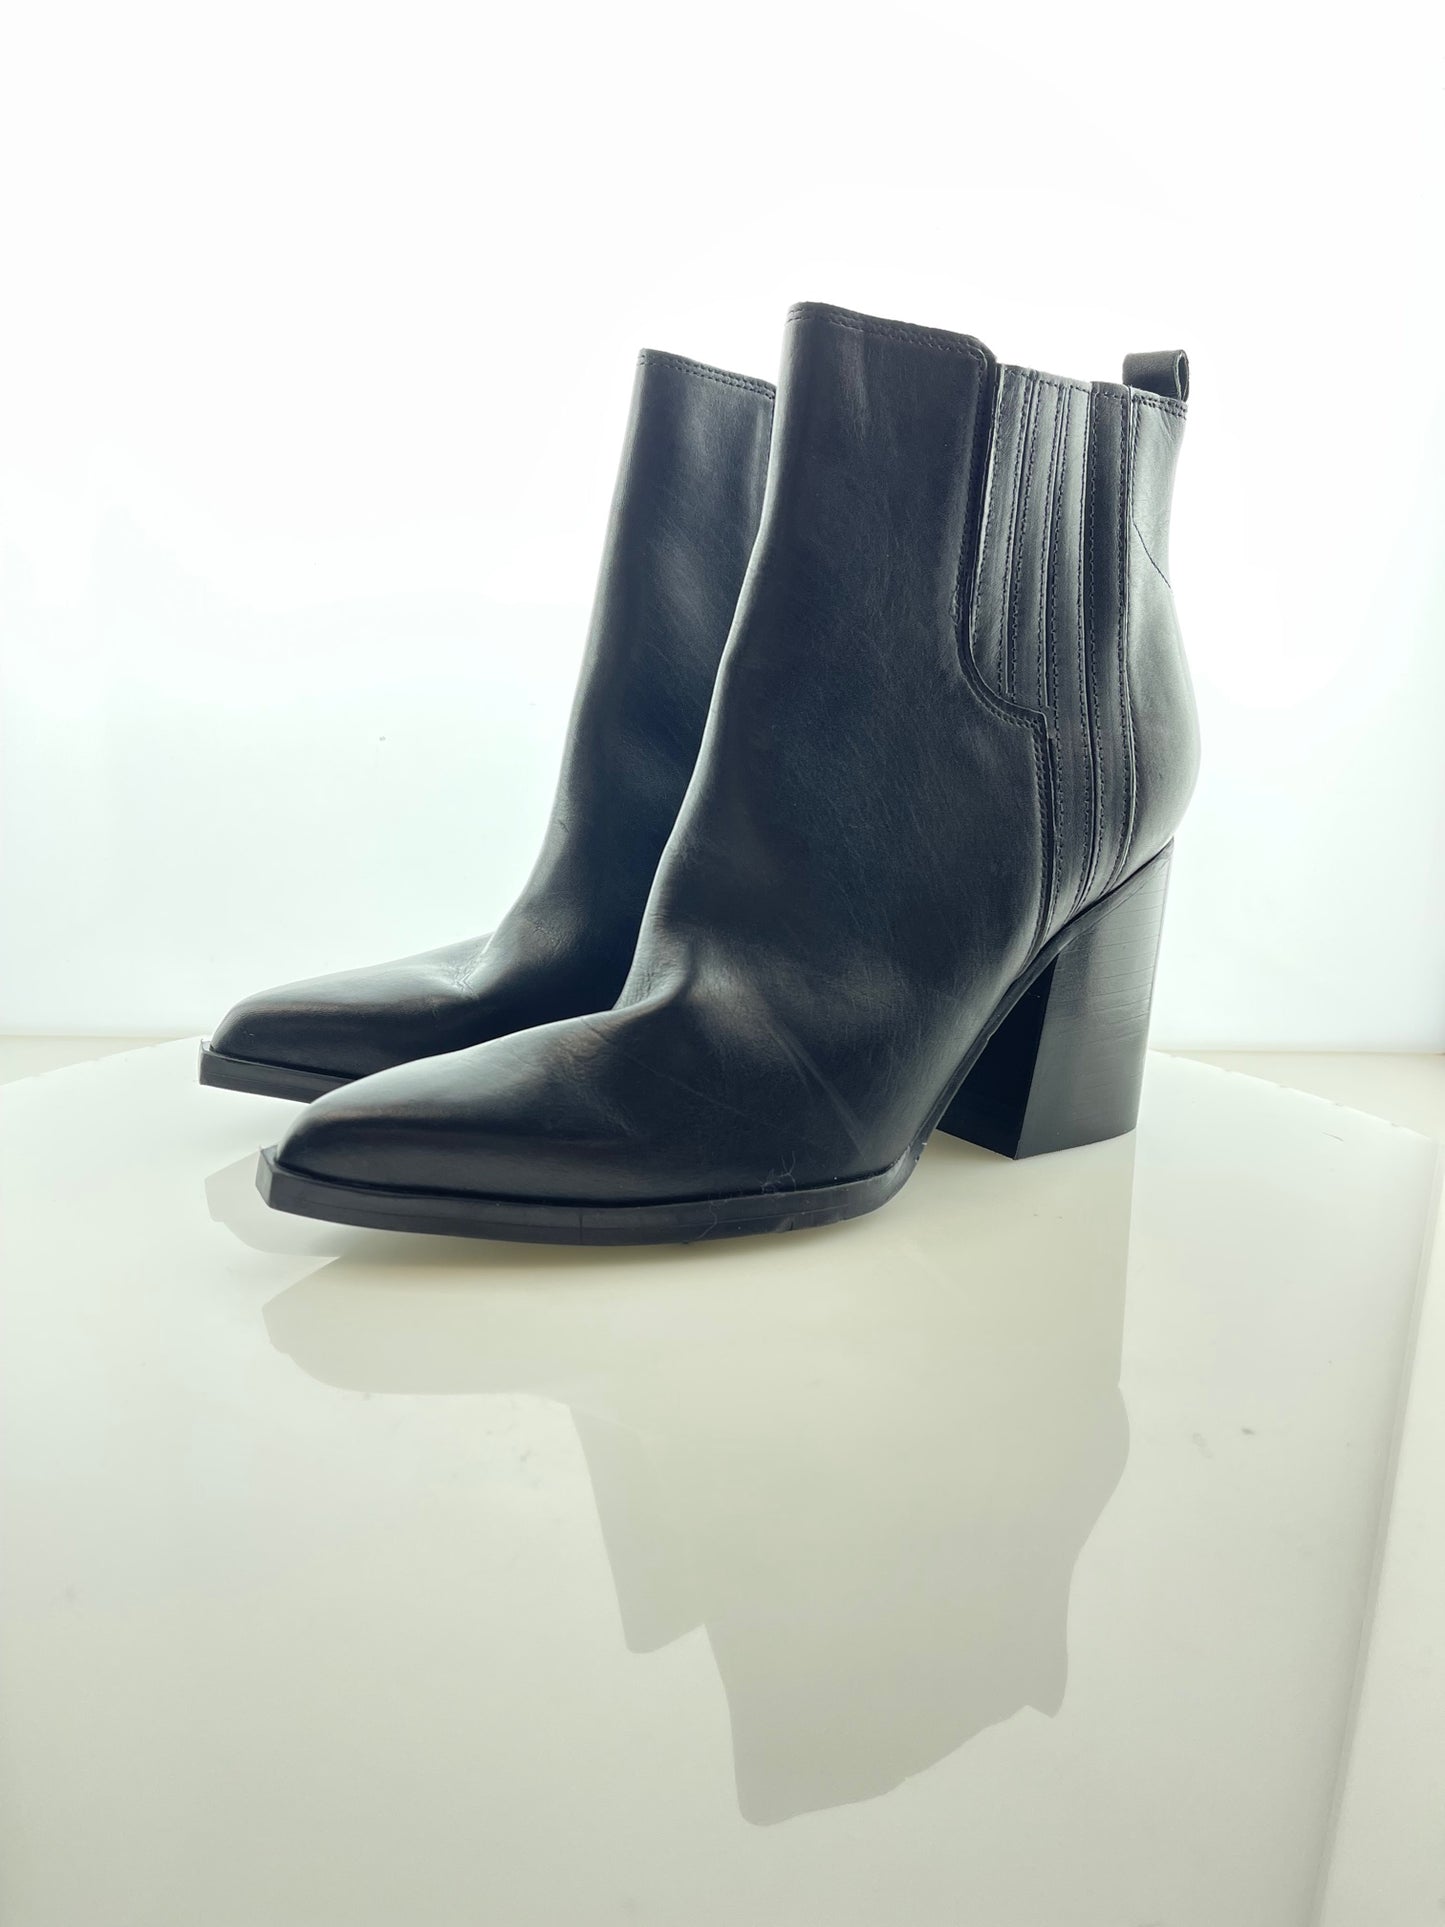 Luxury Fashion Retailer | Women's Boot & Bootie Pallets | NWOT & Returns | 150 Pair Min.